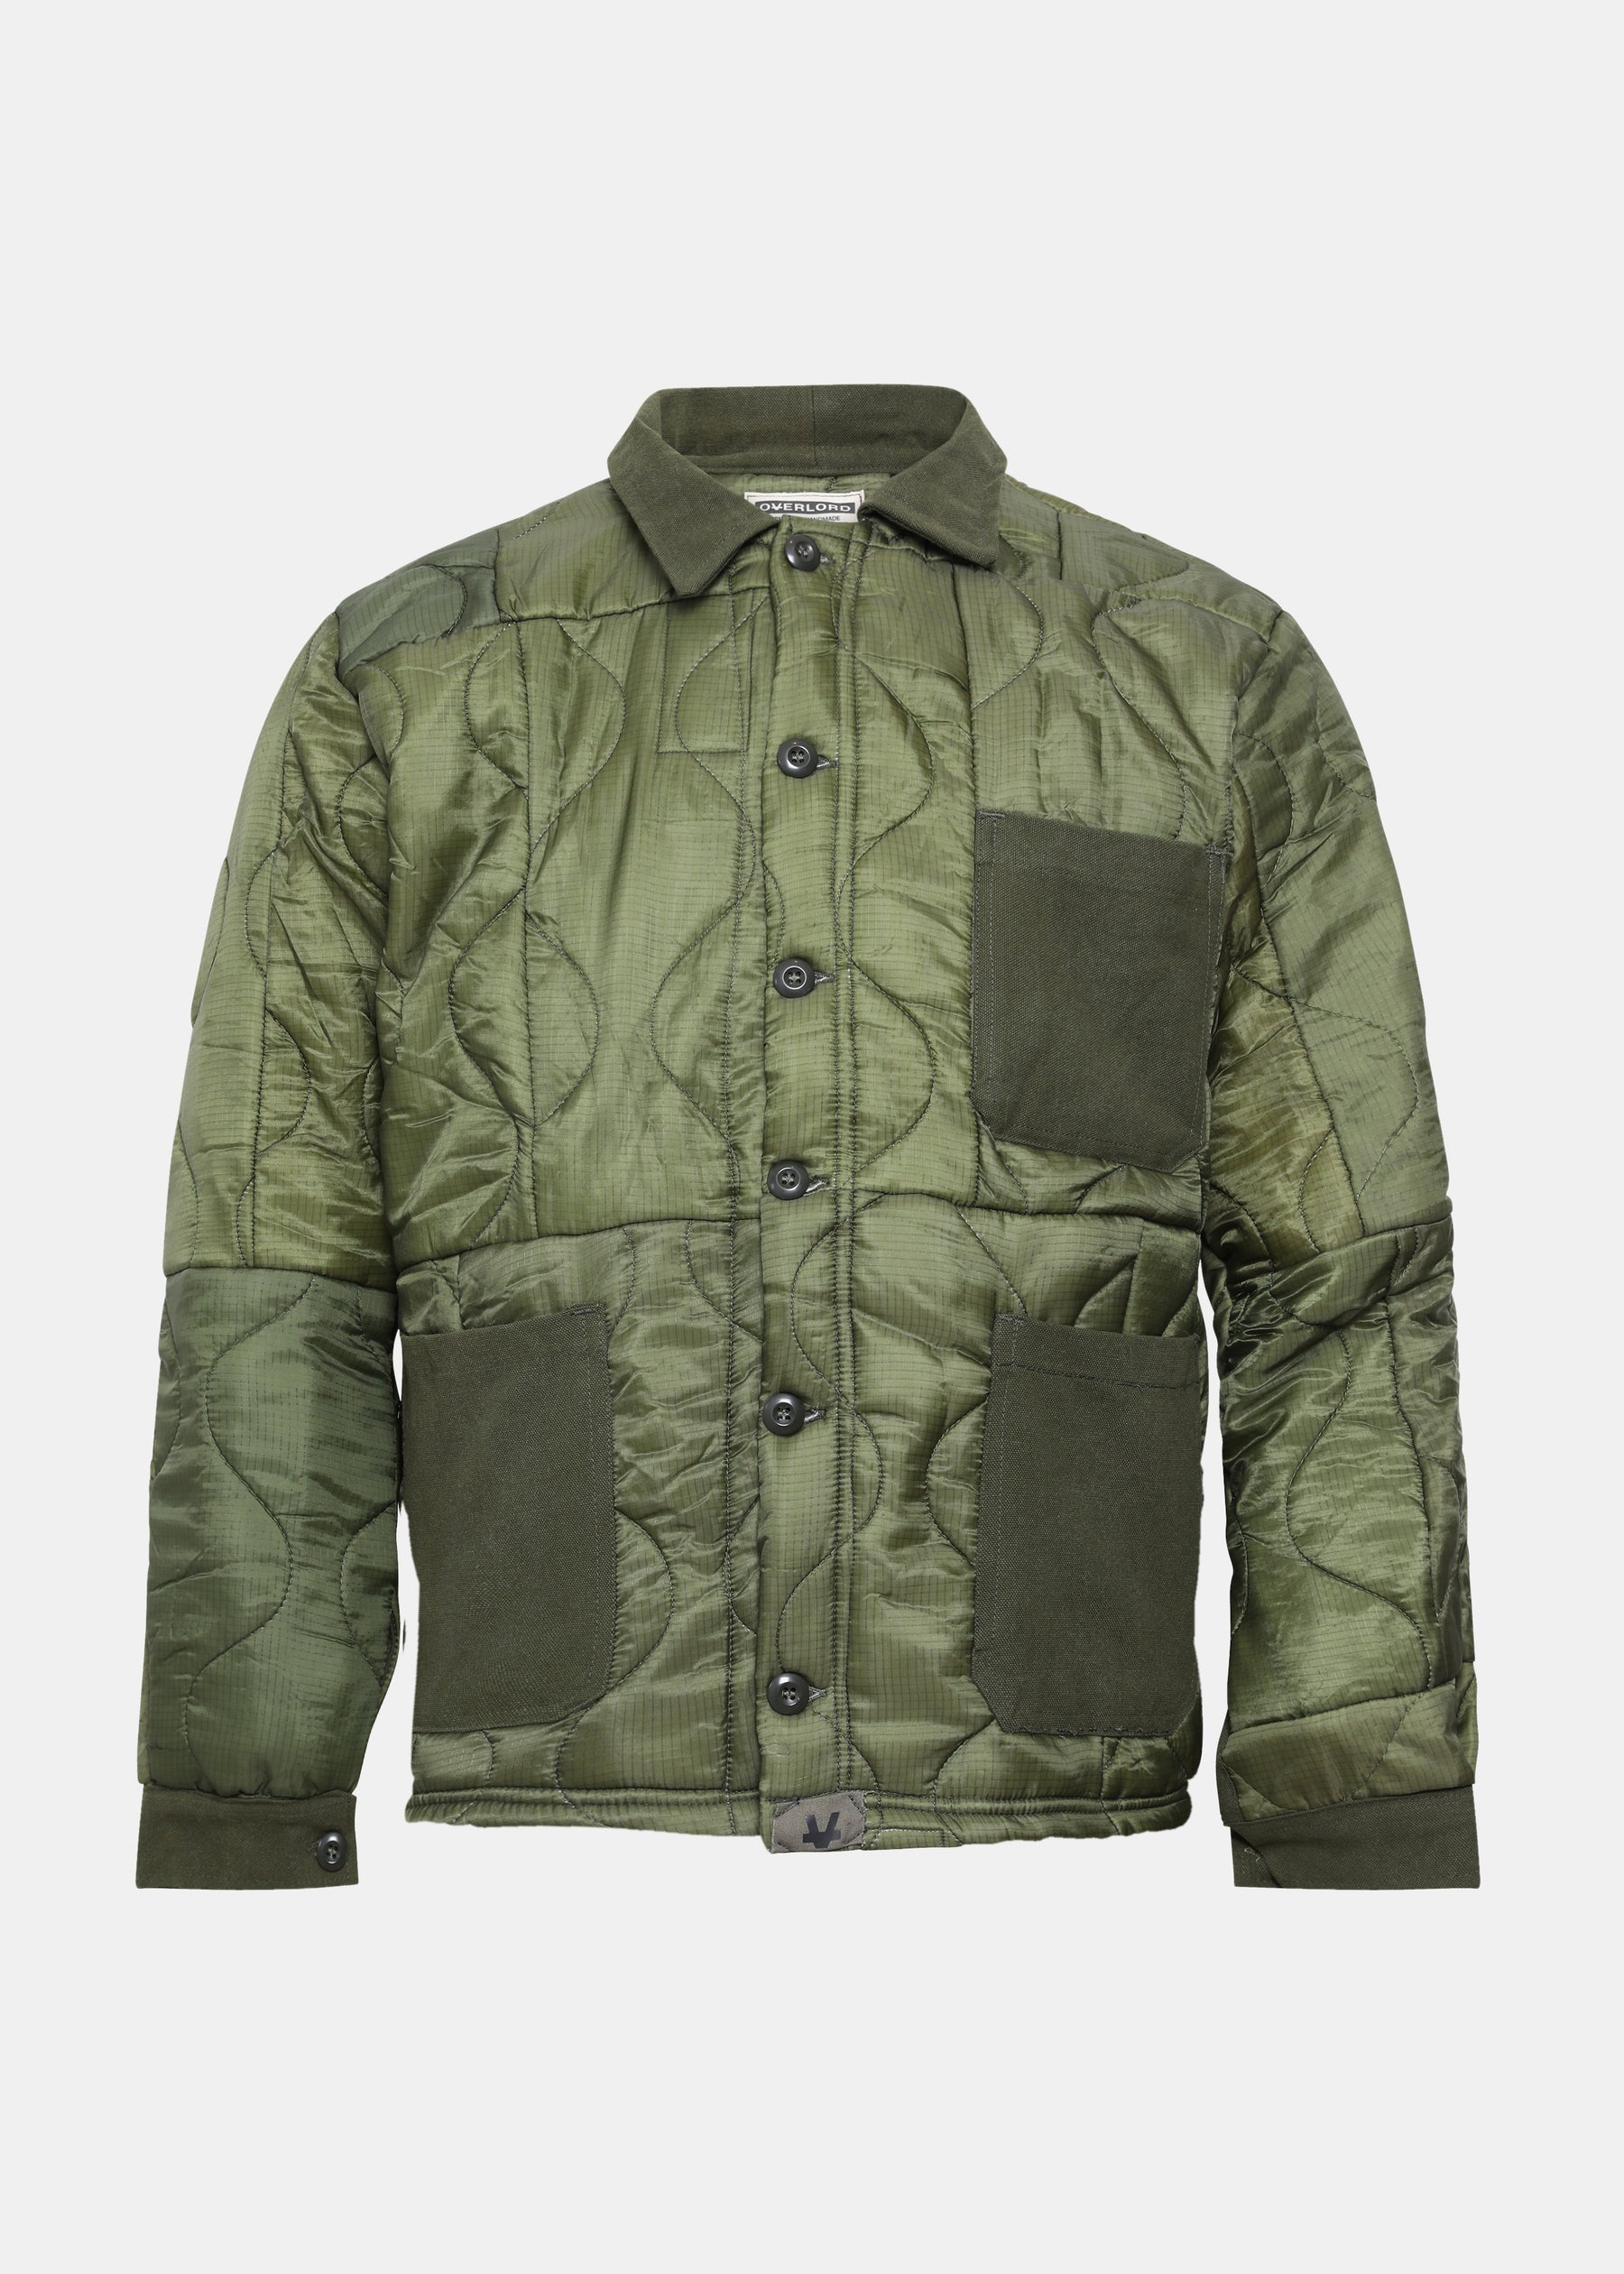 Overlord Brand Vintage Military Liner Jacket JK-PAT-LIN-65